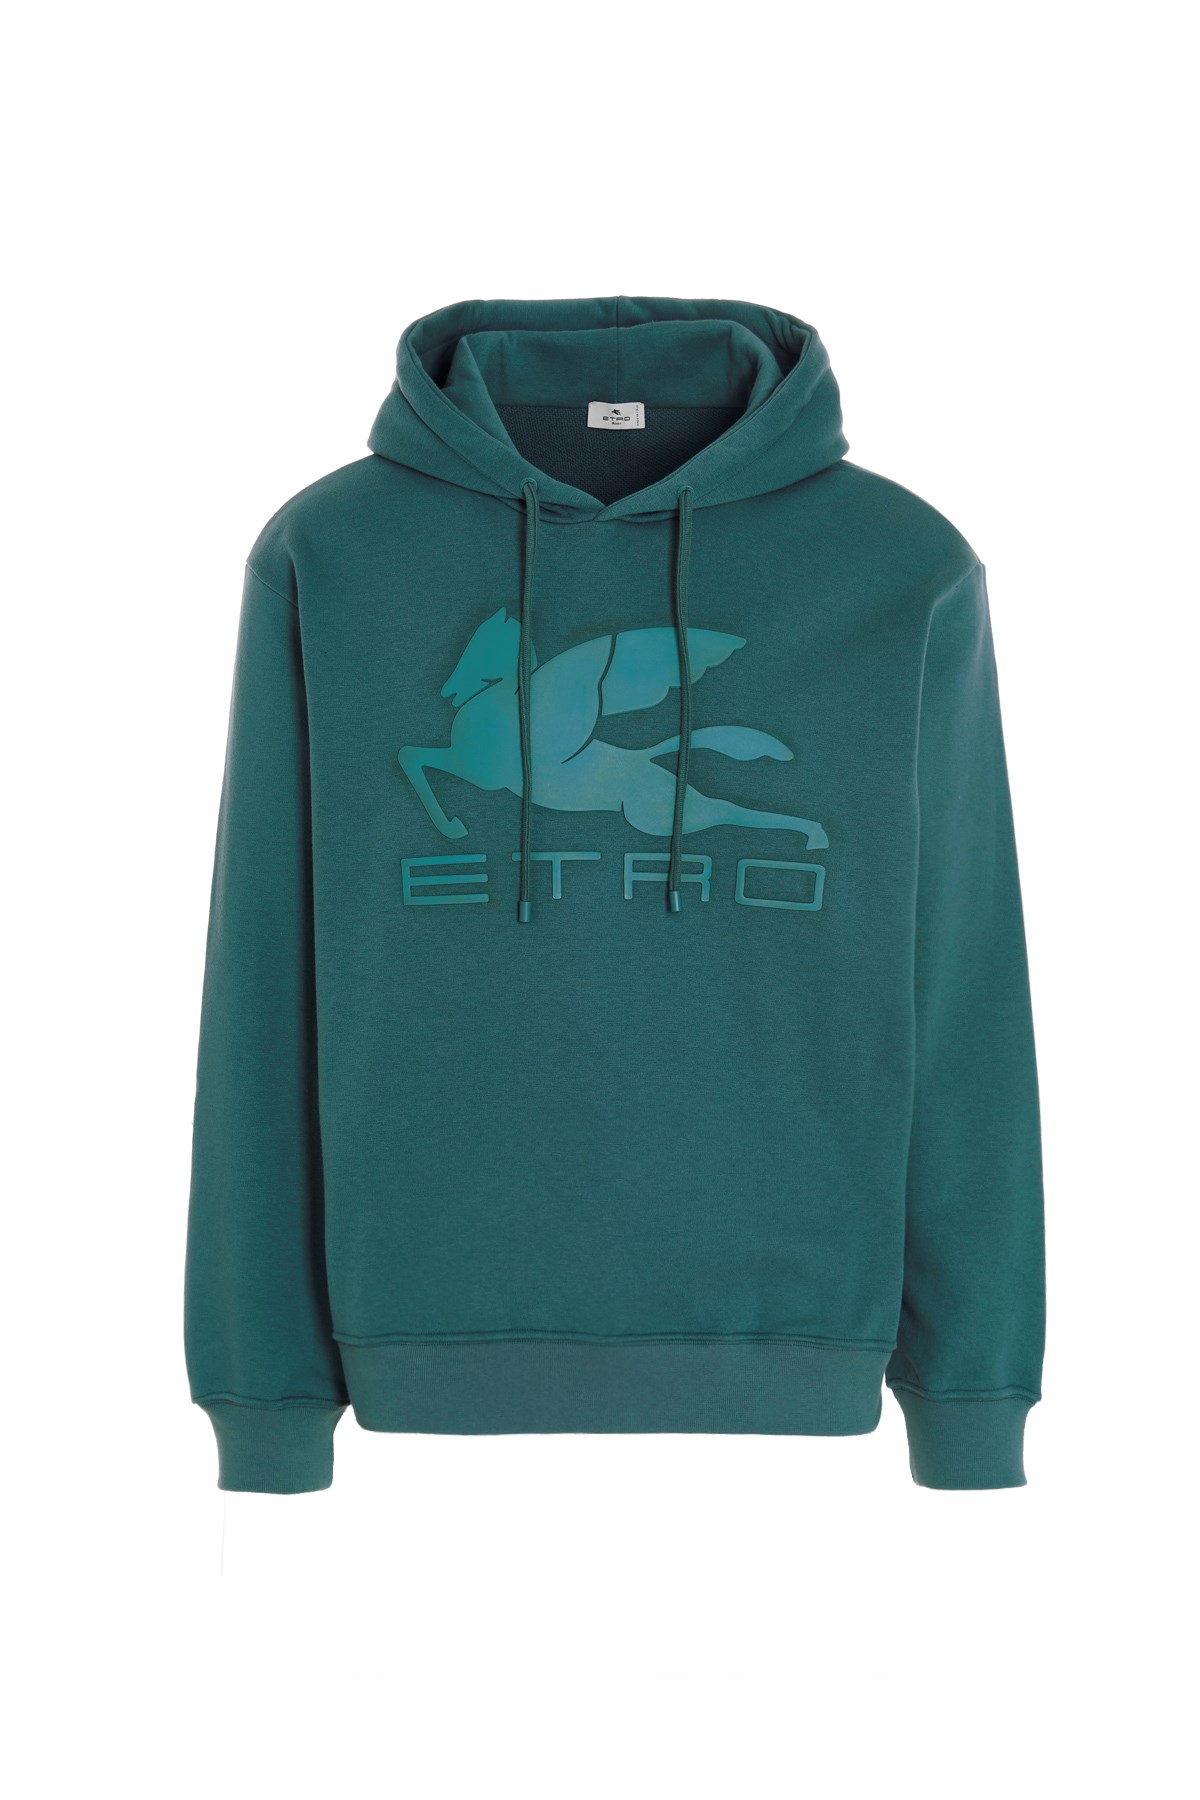 ETRO Logo Hoodie